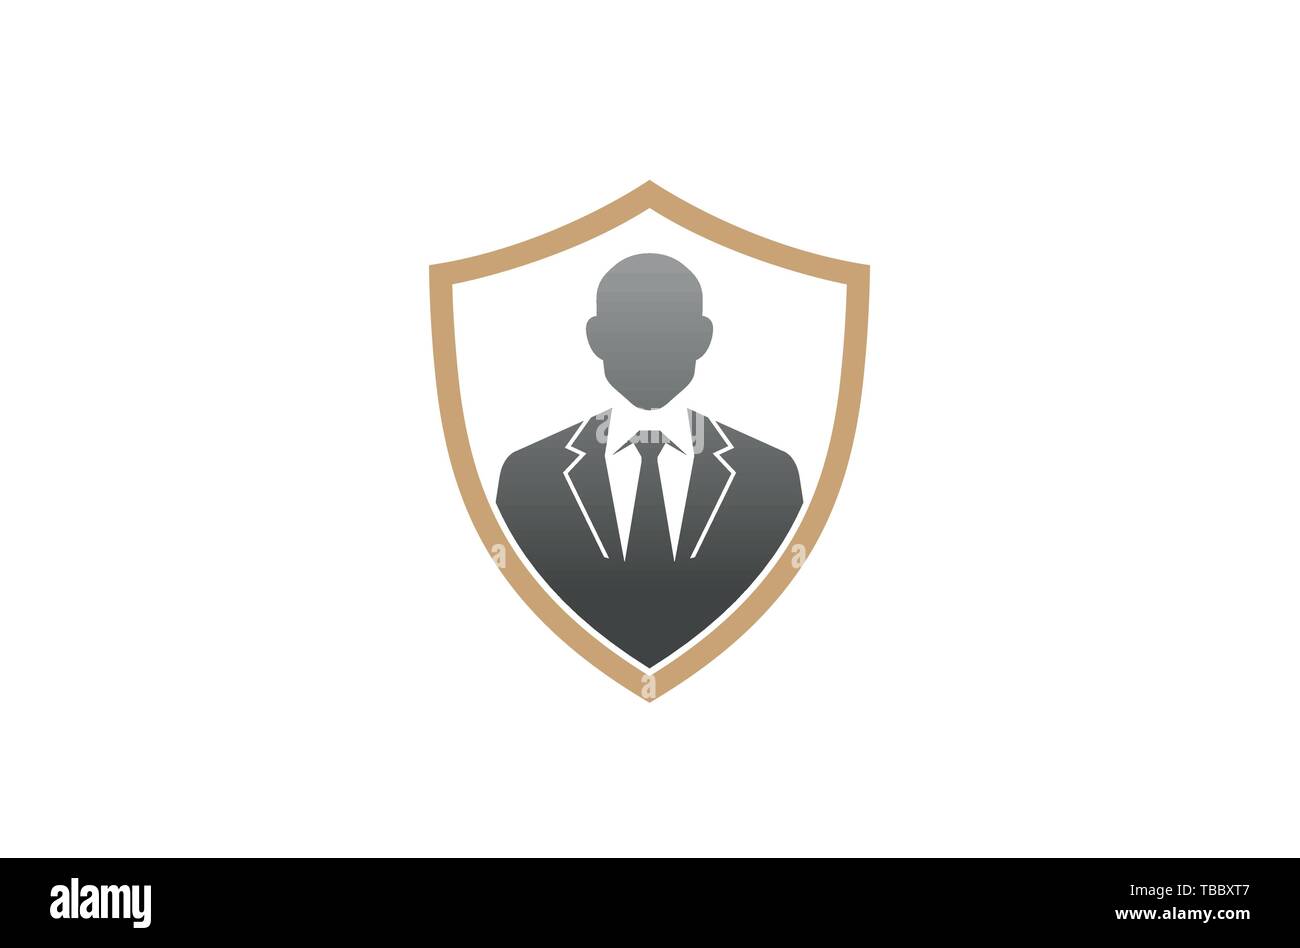 Abbildung Des Symbols Für Das Creative Gentelman Agent Tuxedo Shield-Logo Stock Vektor